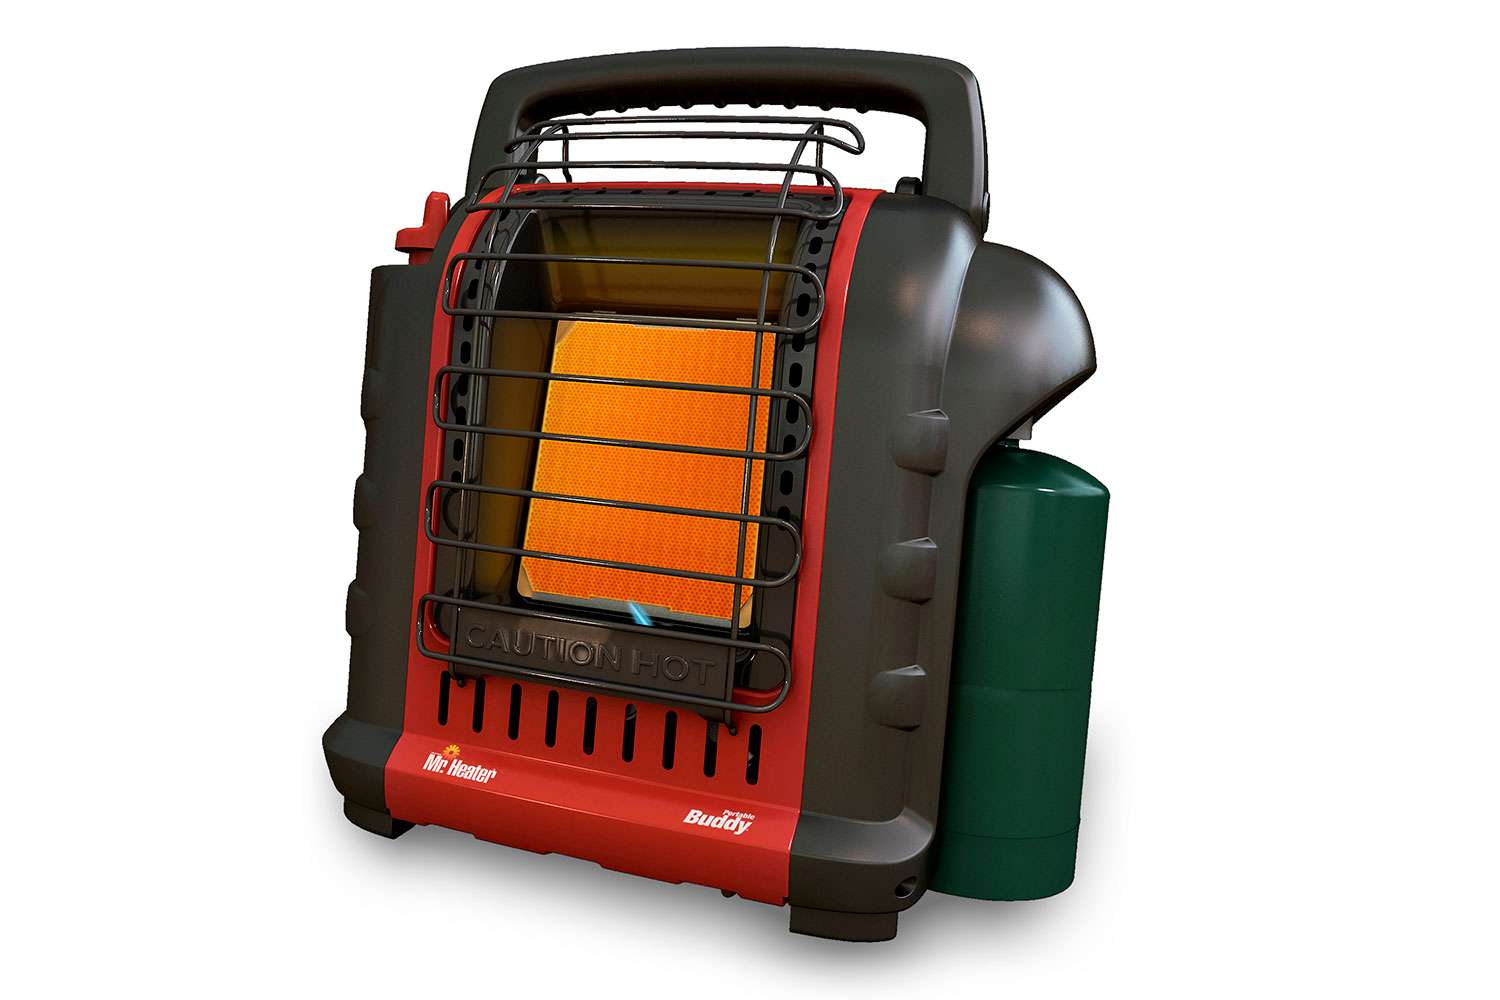 Mr. Heater Portable Buddy Heater, $104.99